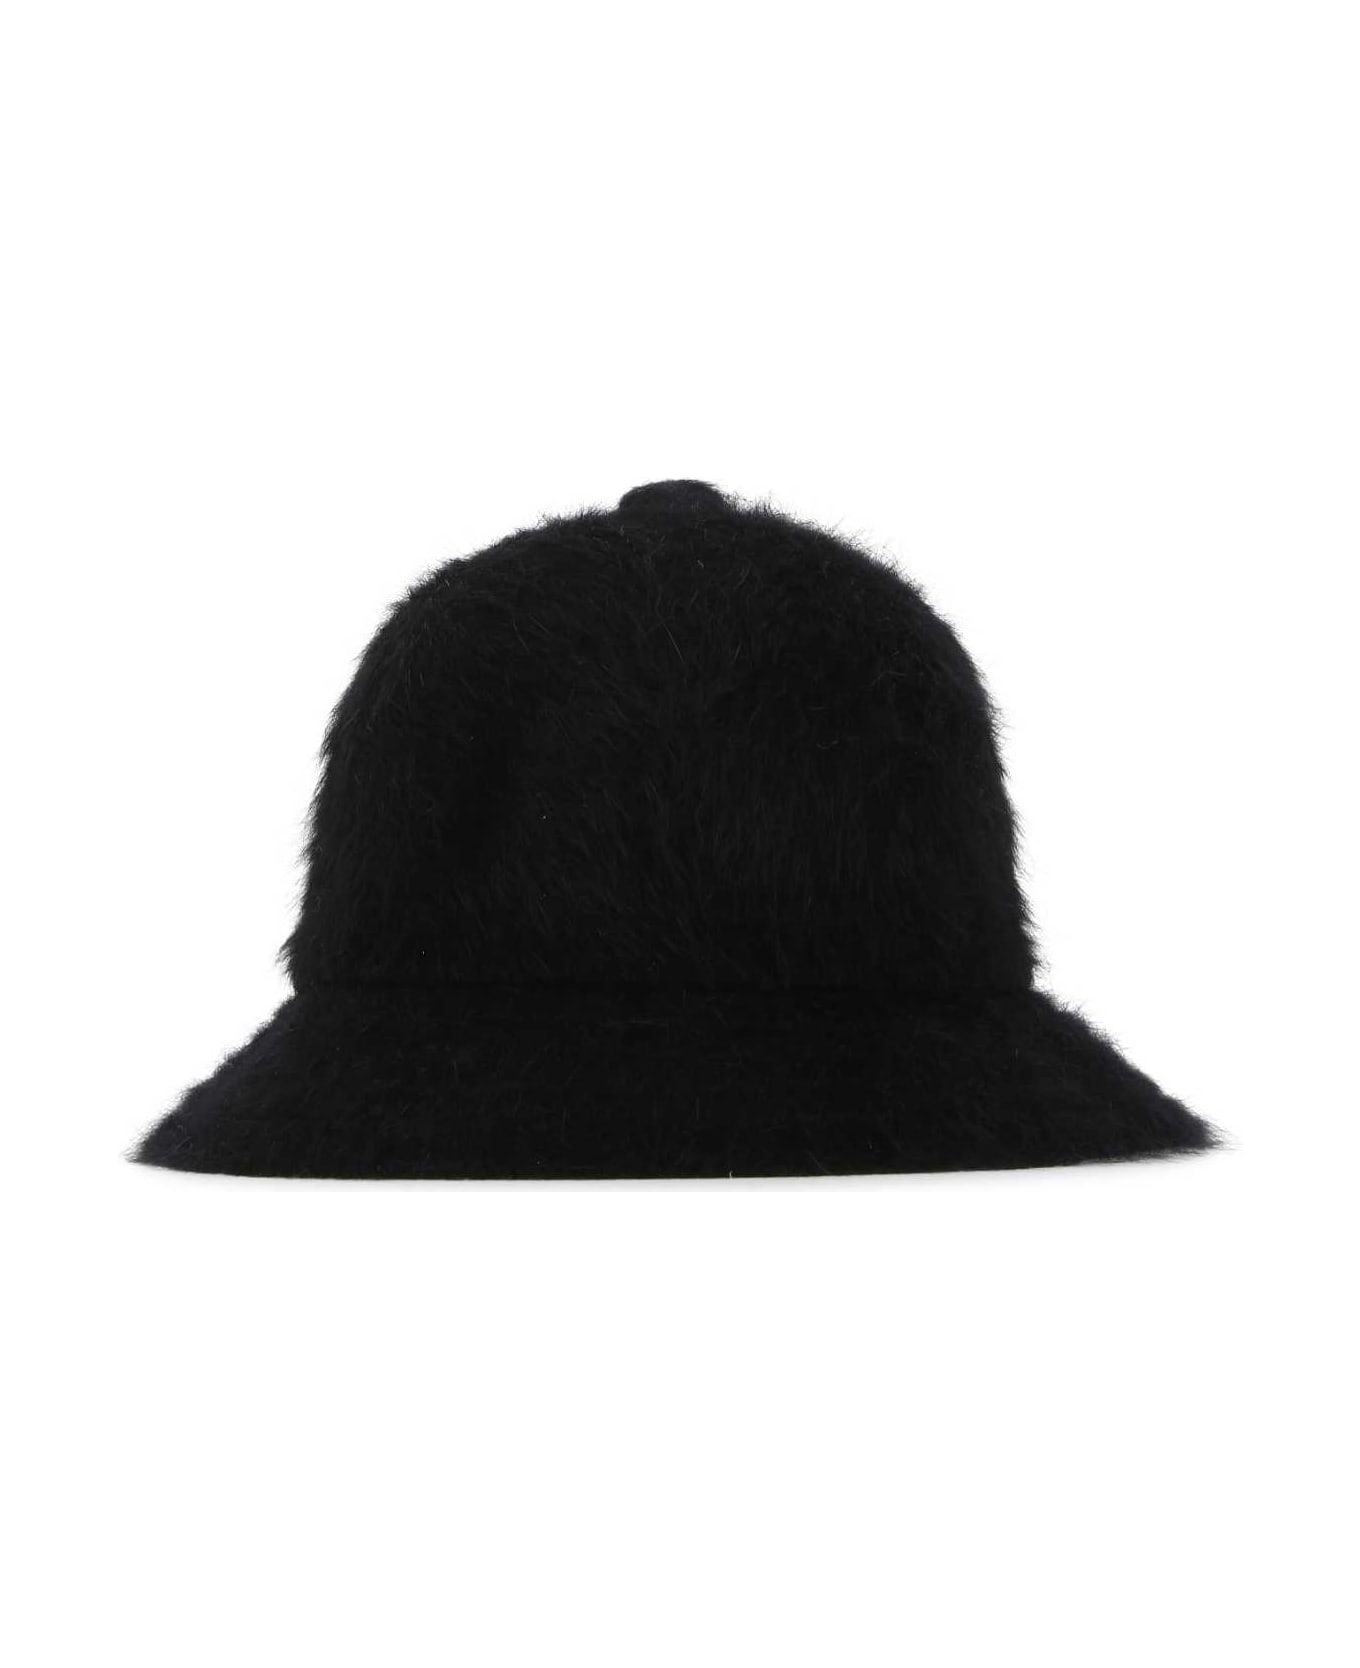 Kangol Black Angora Blend Furgora Casual Hat - BK001